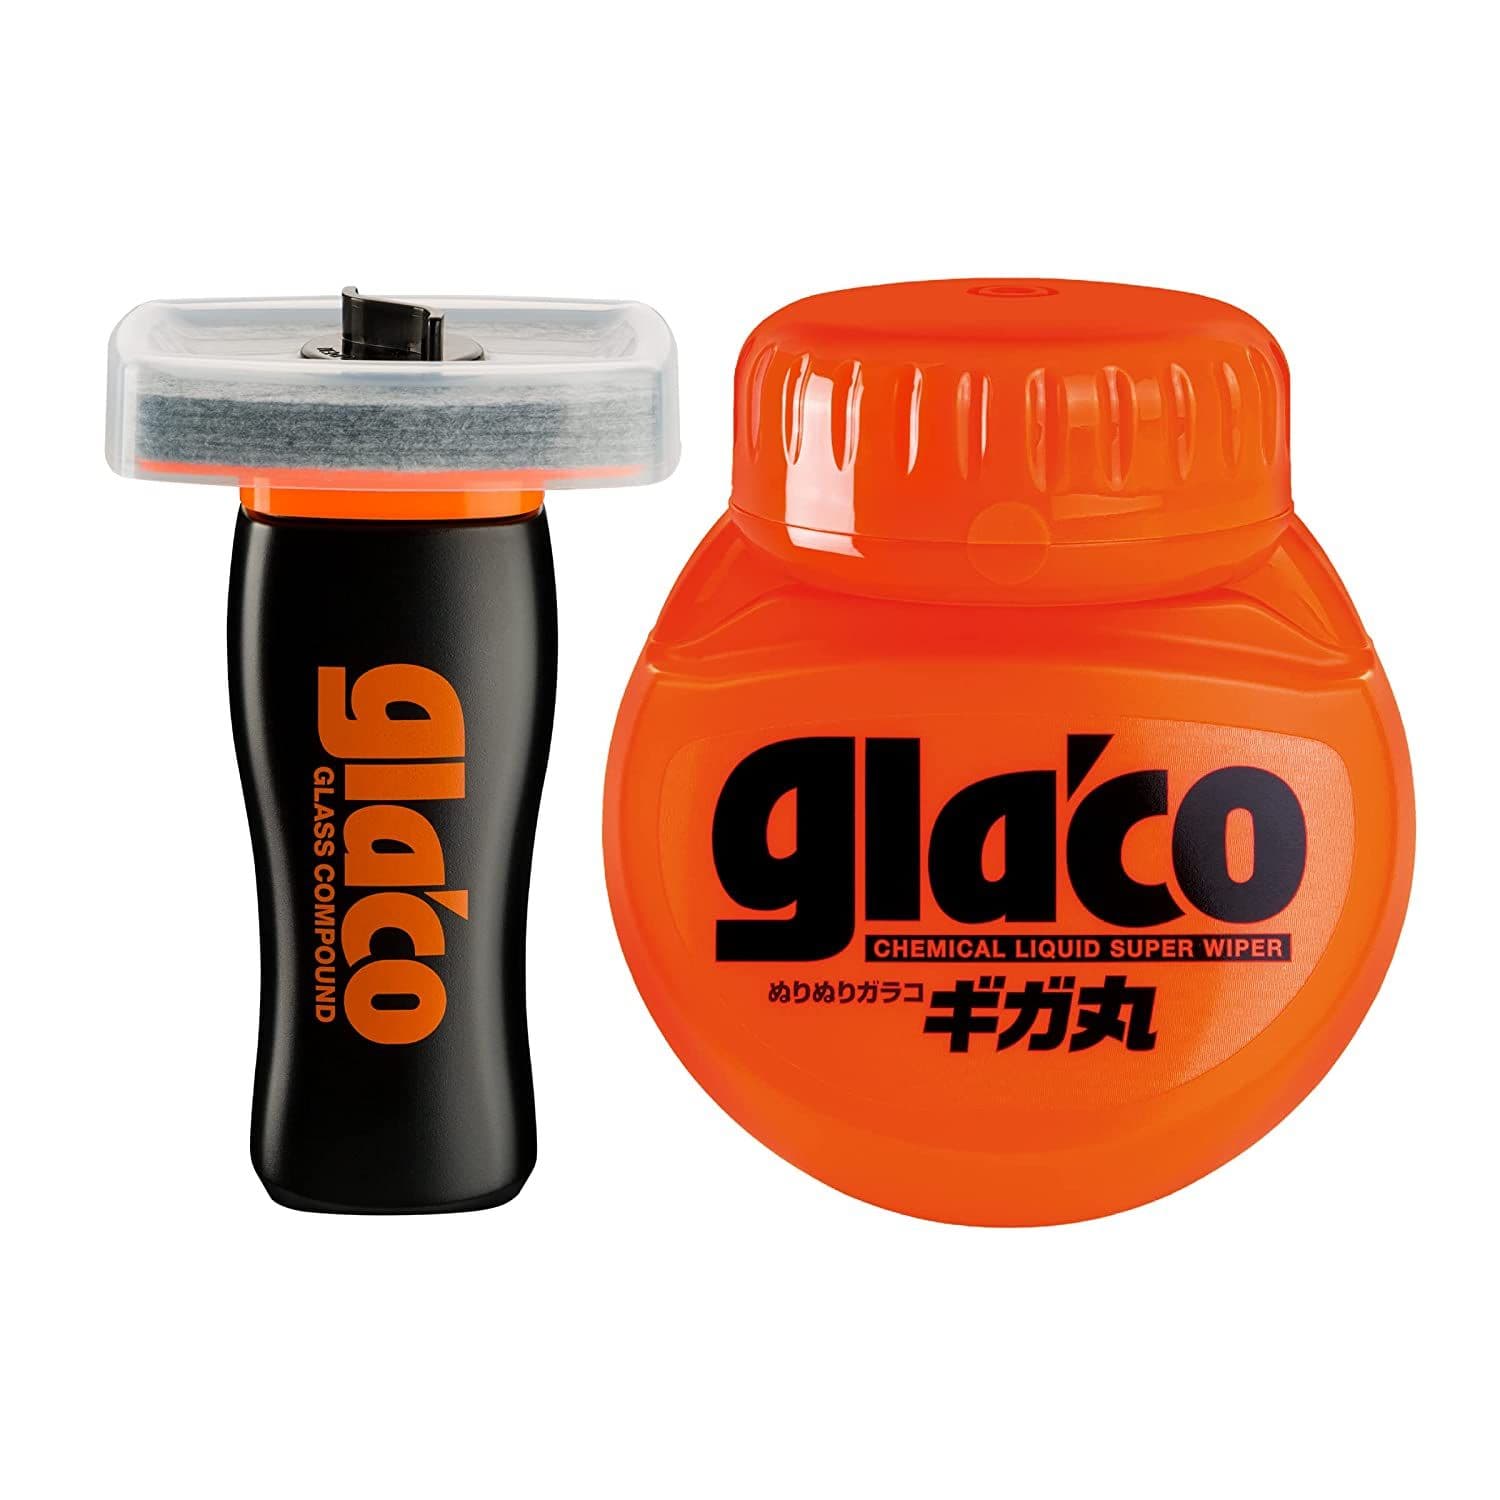 SOFT99 ULTRA GLACO GLASS COATING & GLACO GLASS COMPOUND REVIEW 